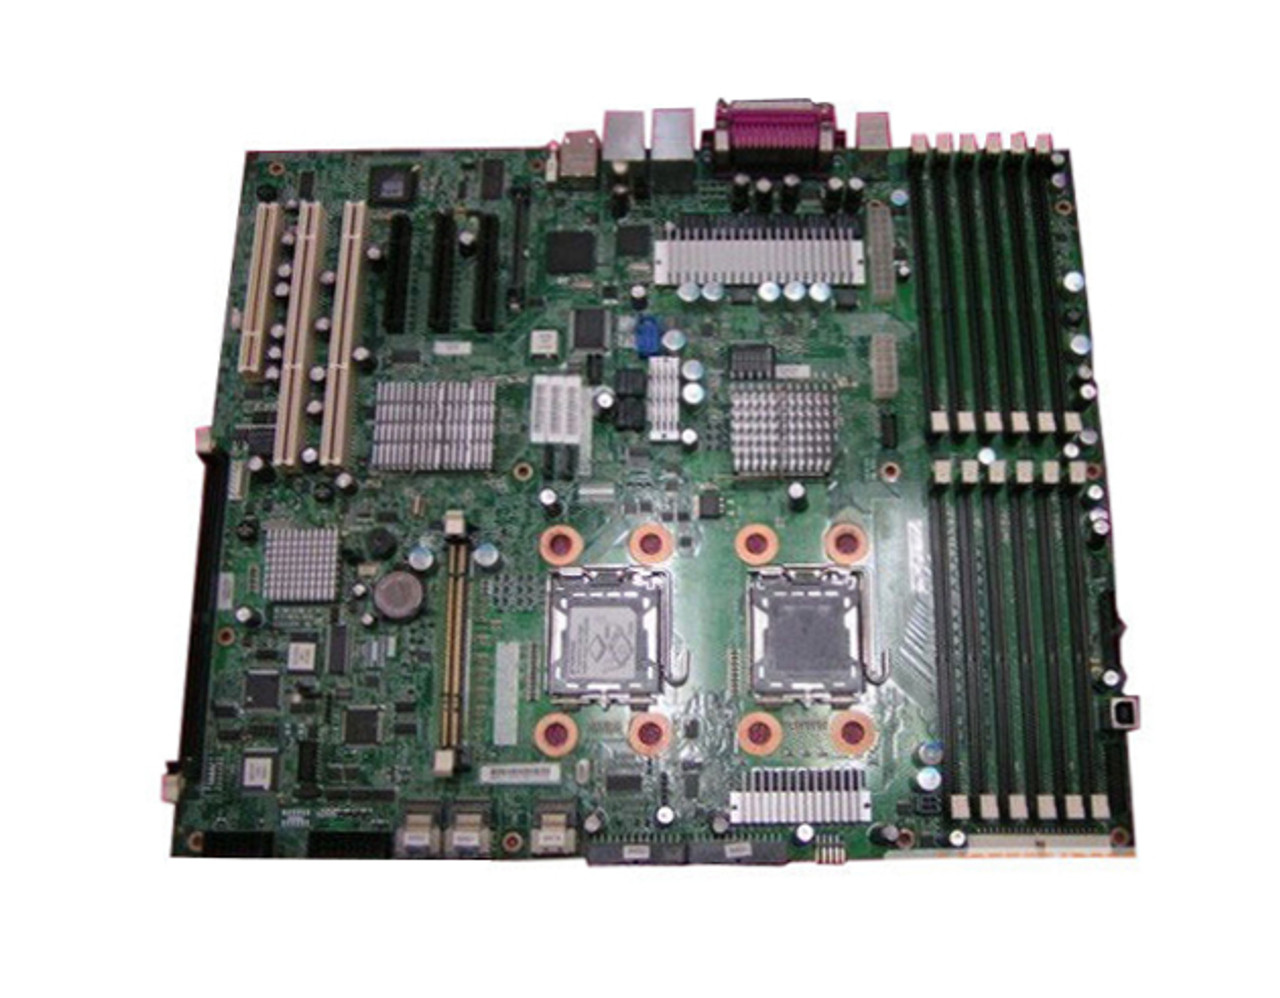 46D1406 - IBM System Board for System x3400 M2/X3500 M2 Server